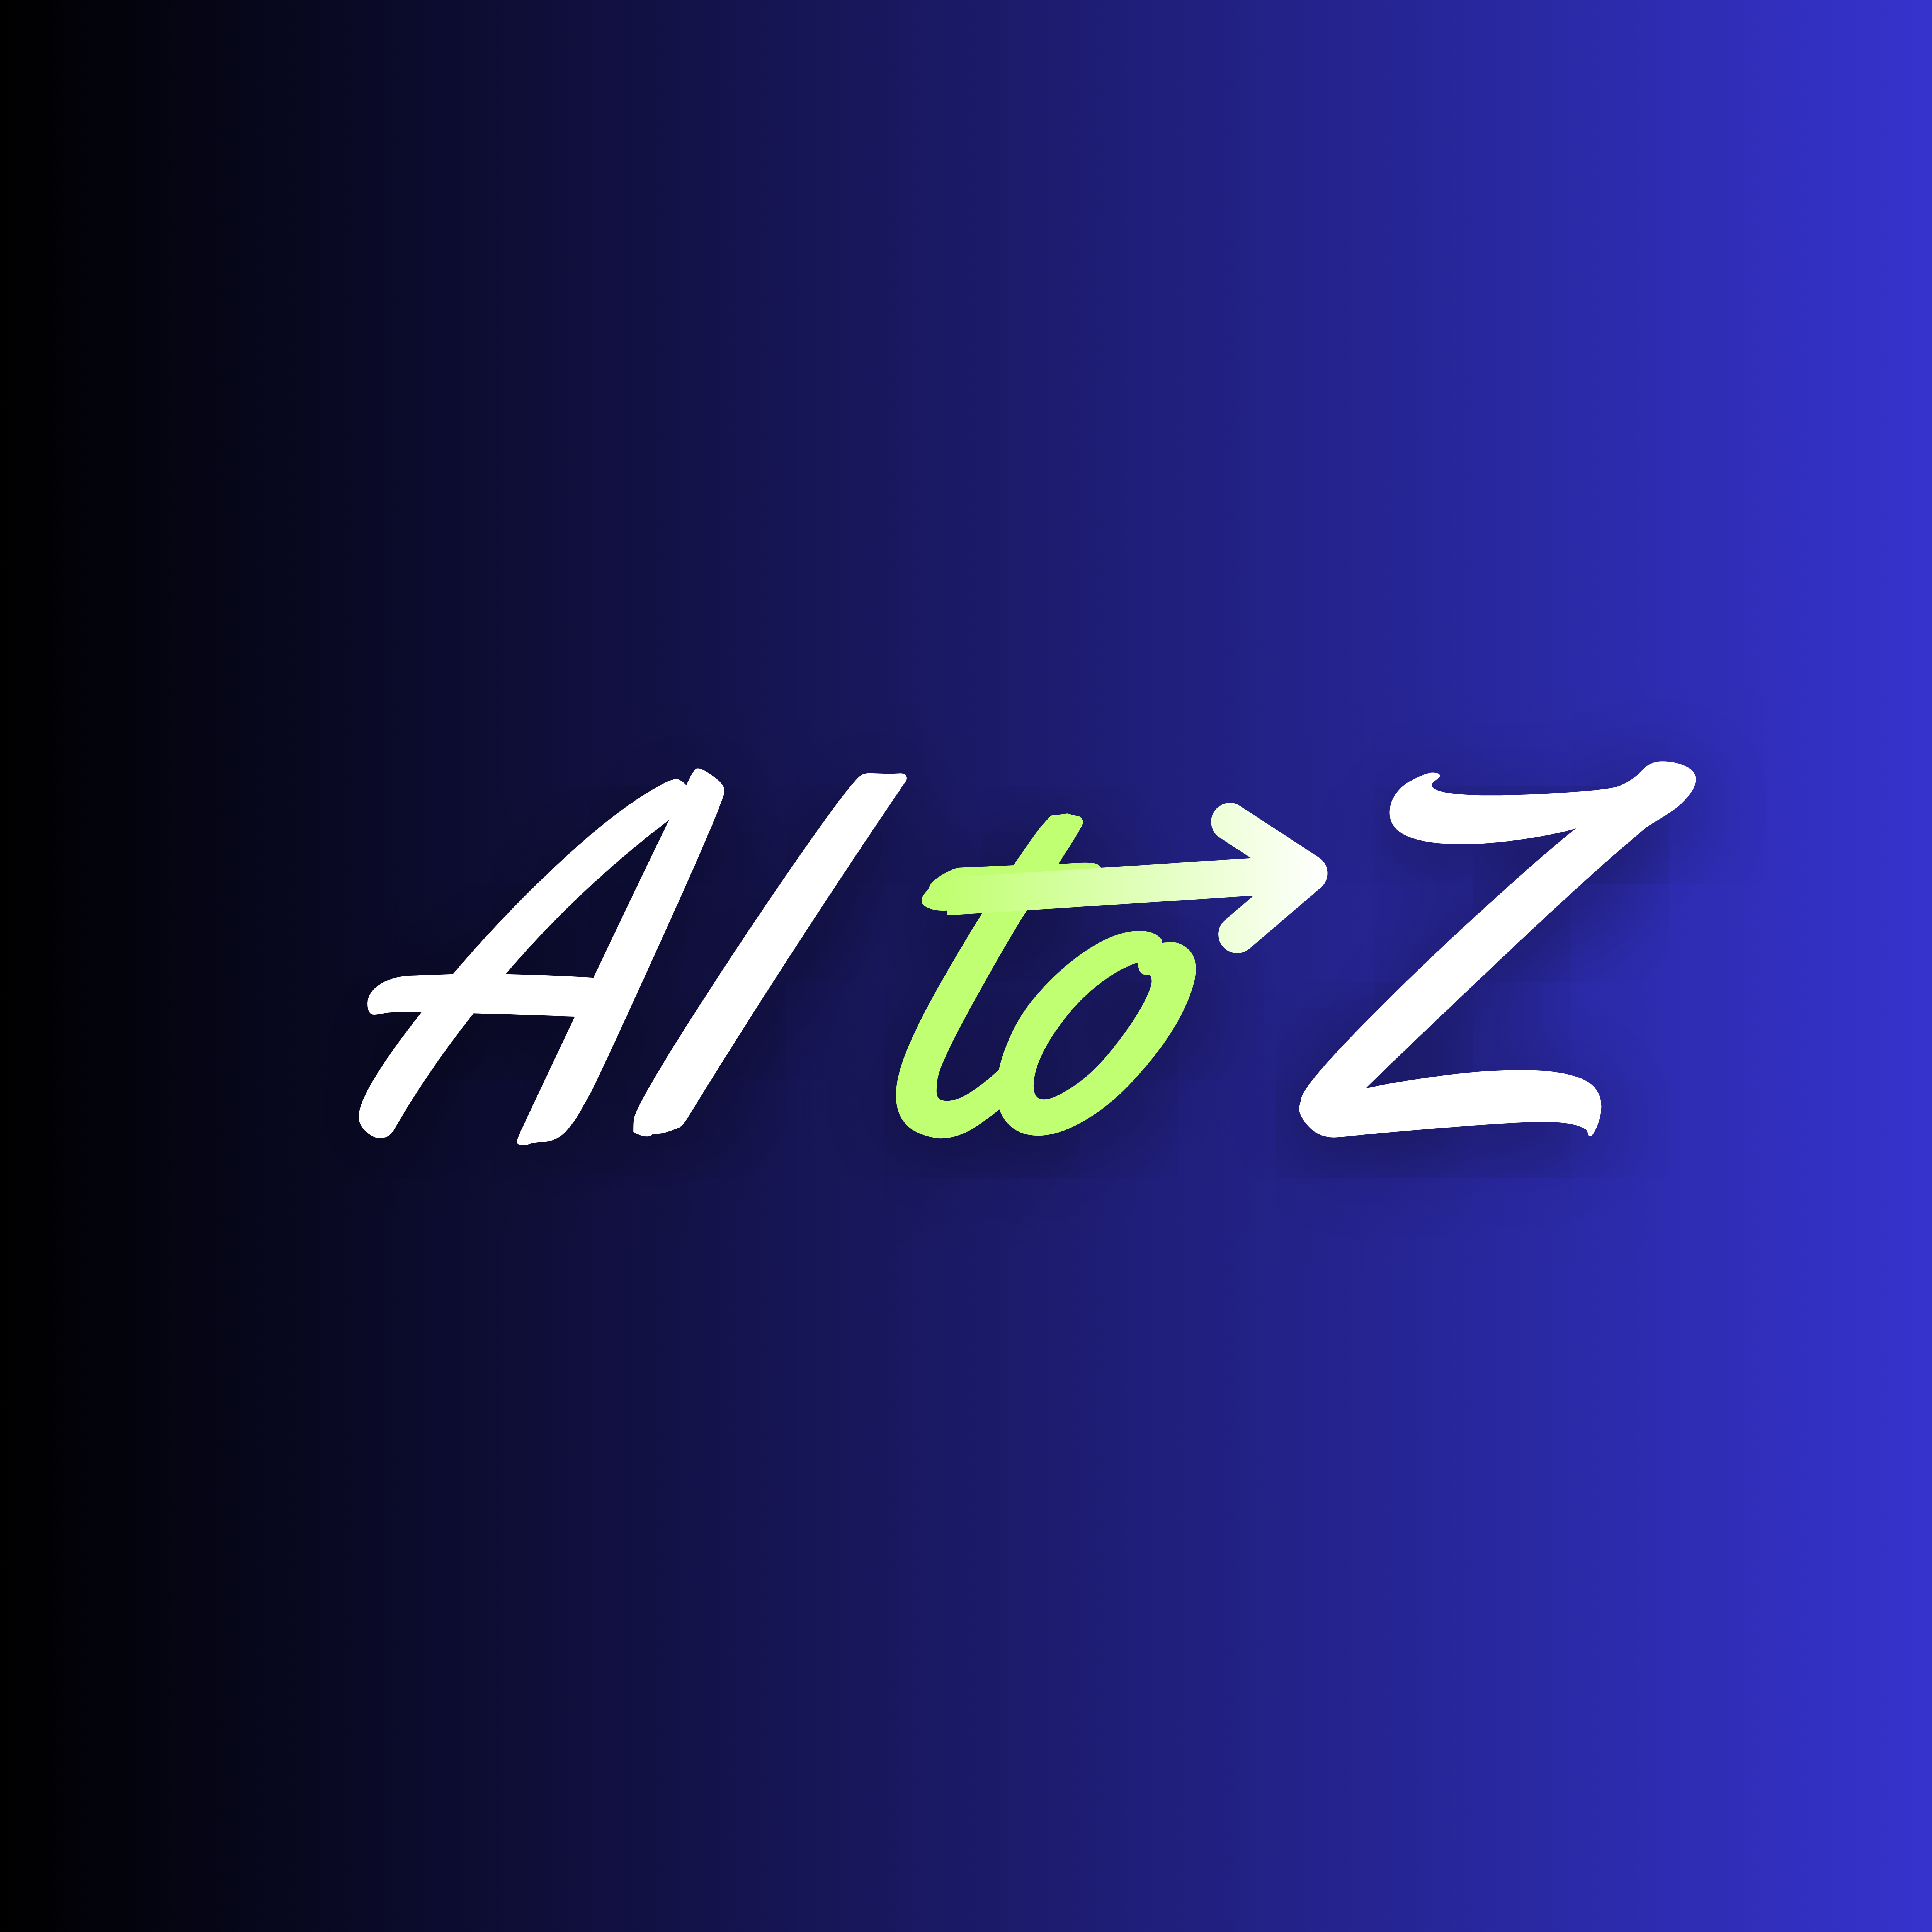 AItoZee - Your Creat... logo